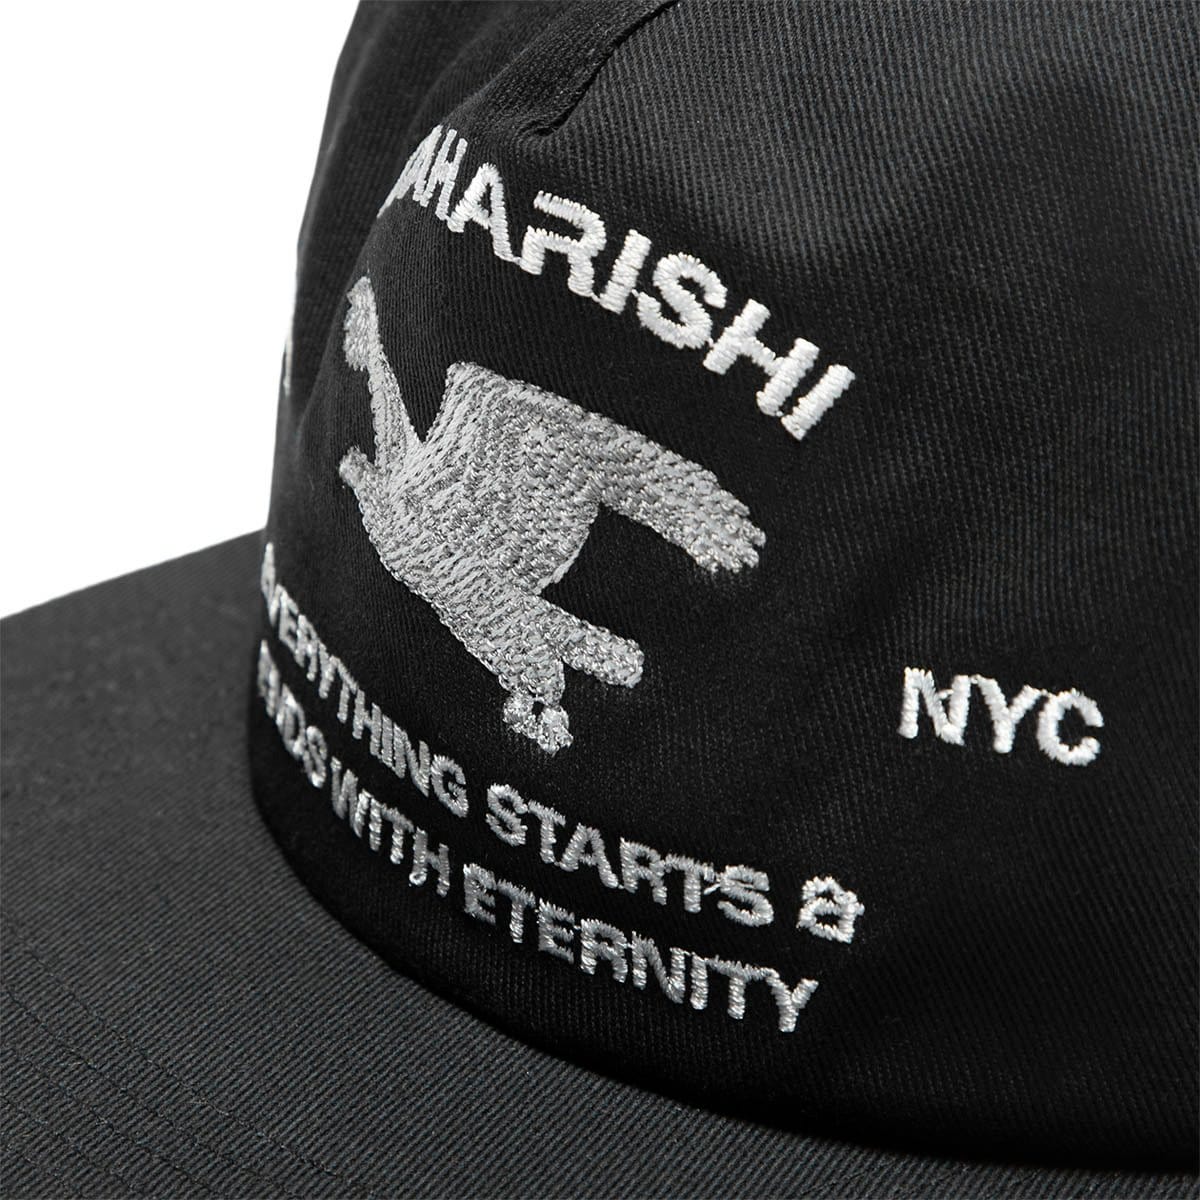 Maharishi Headwear BLACK / O/S DRONE EAGLE TOUR CAP